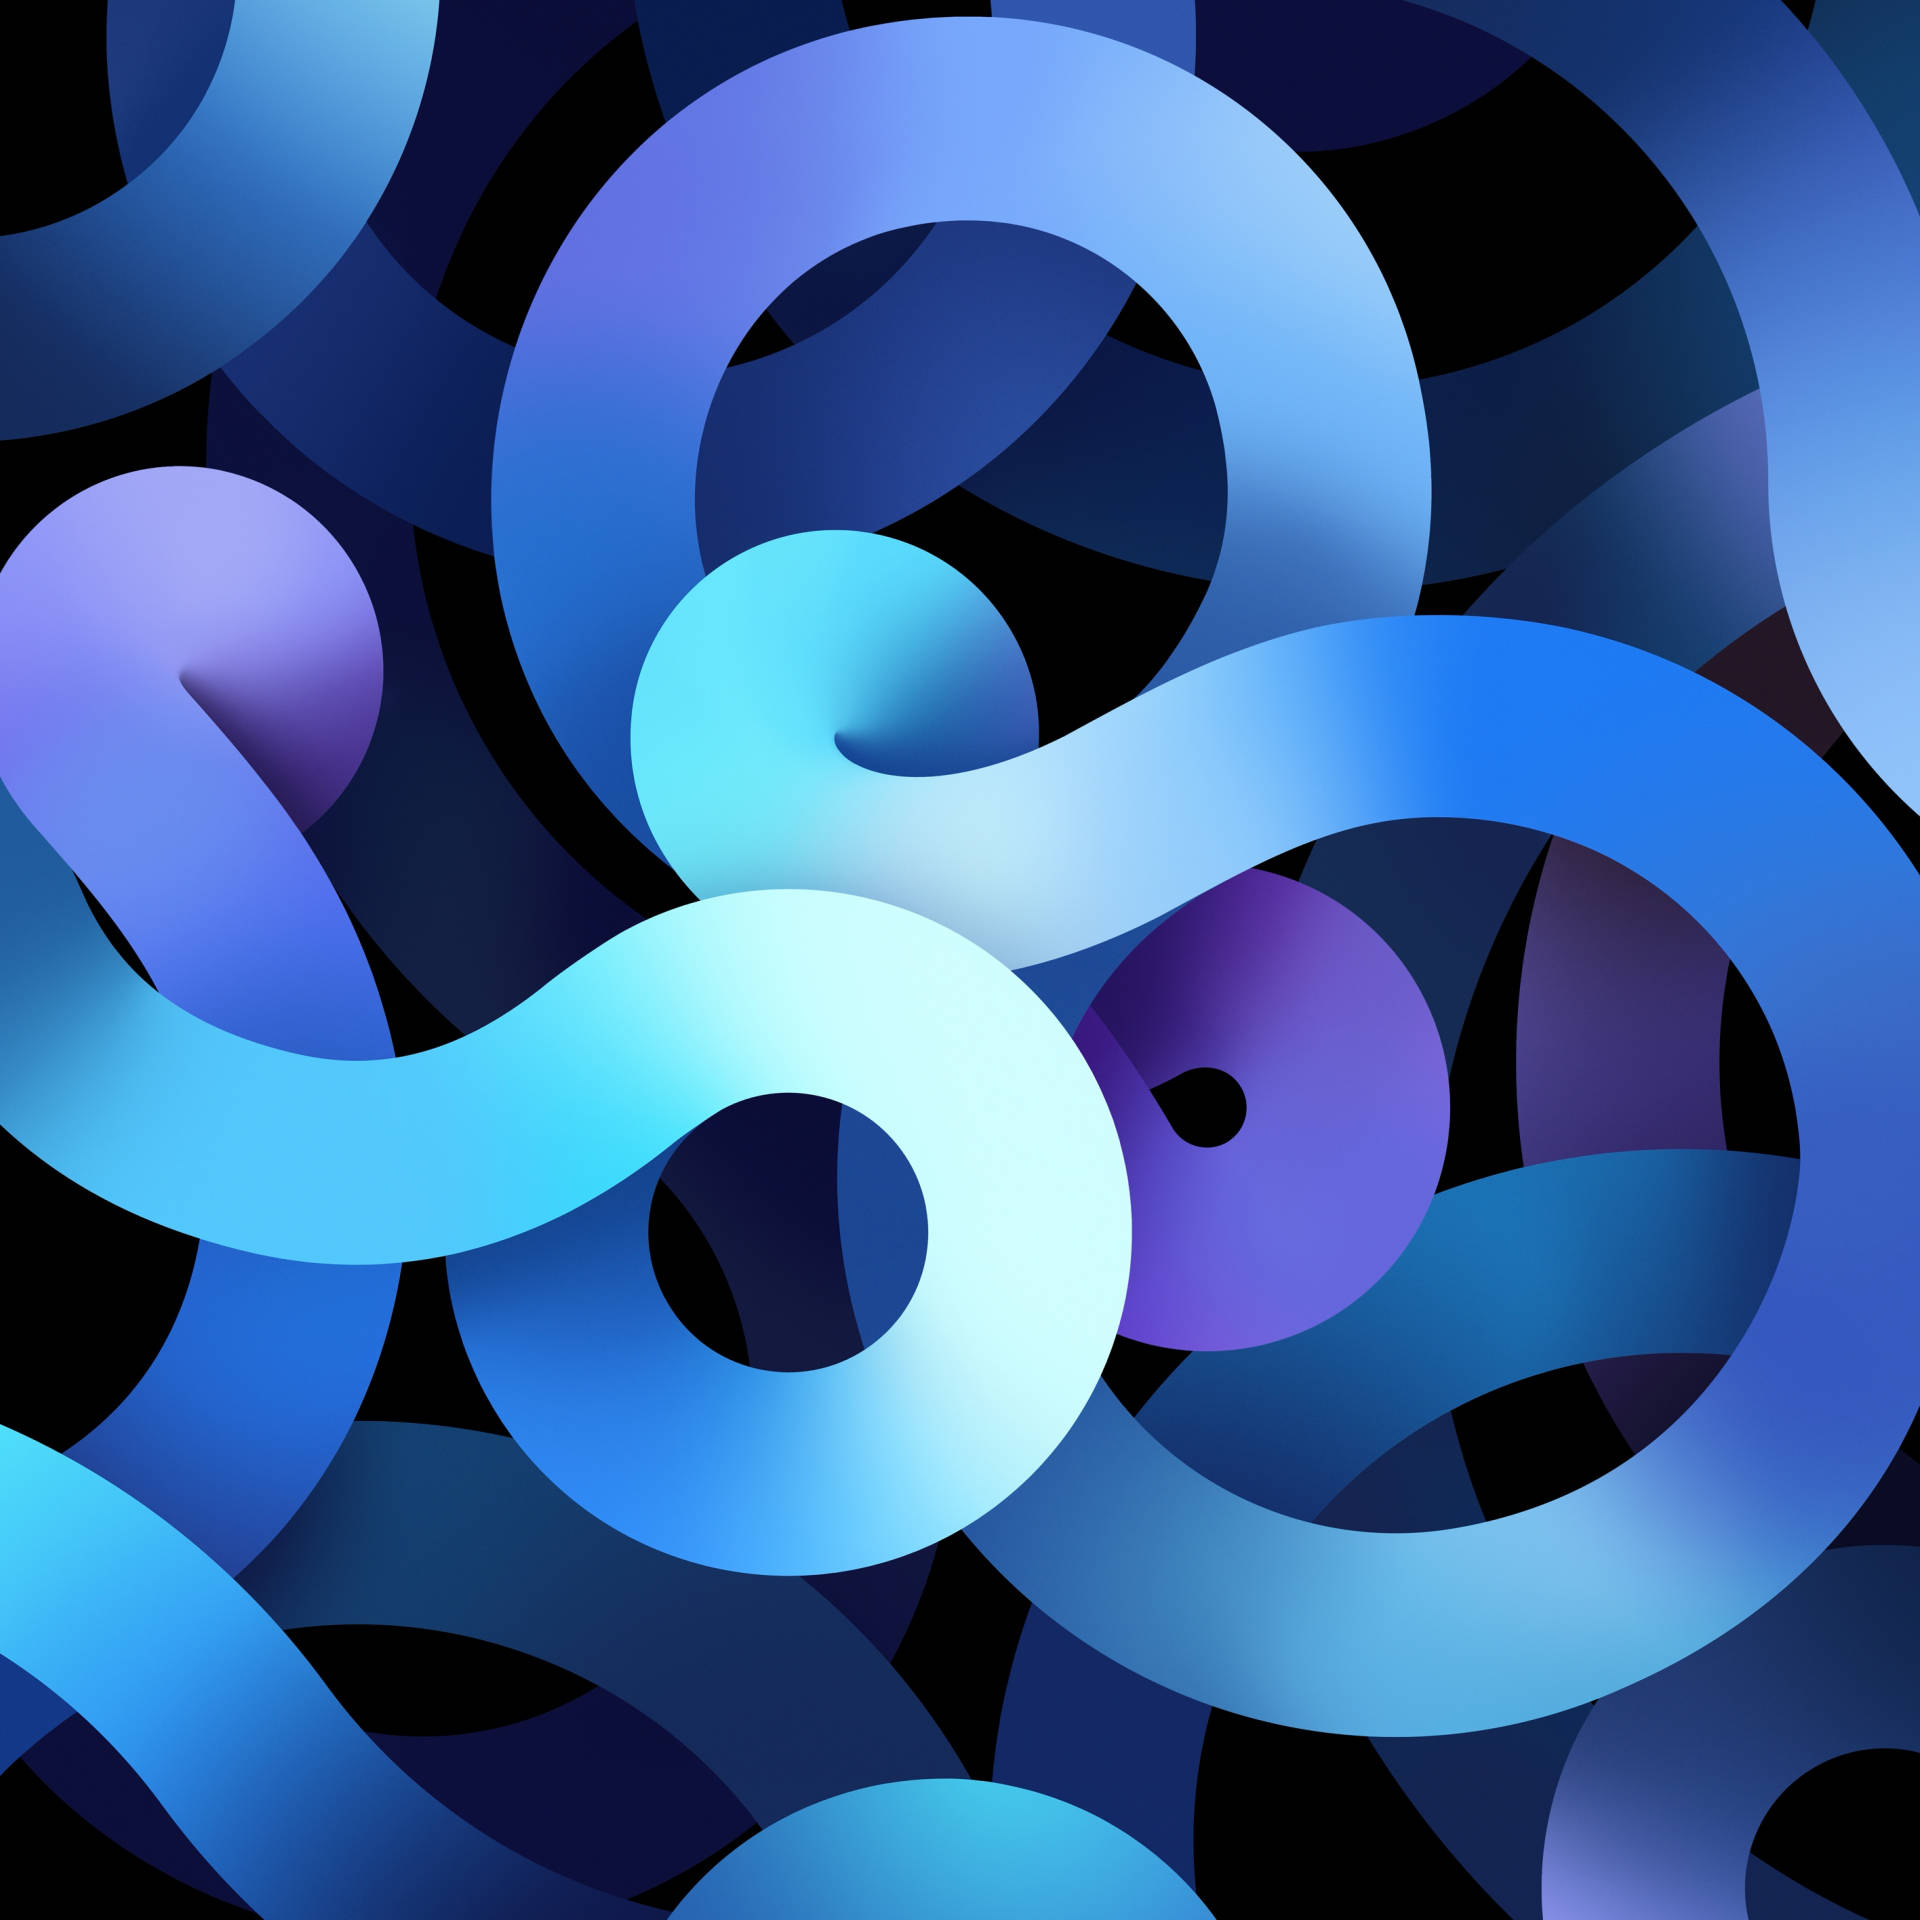 Blue Swirls Ipad Air 4 Background